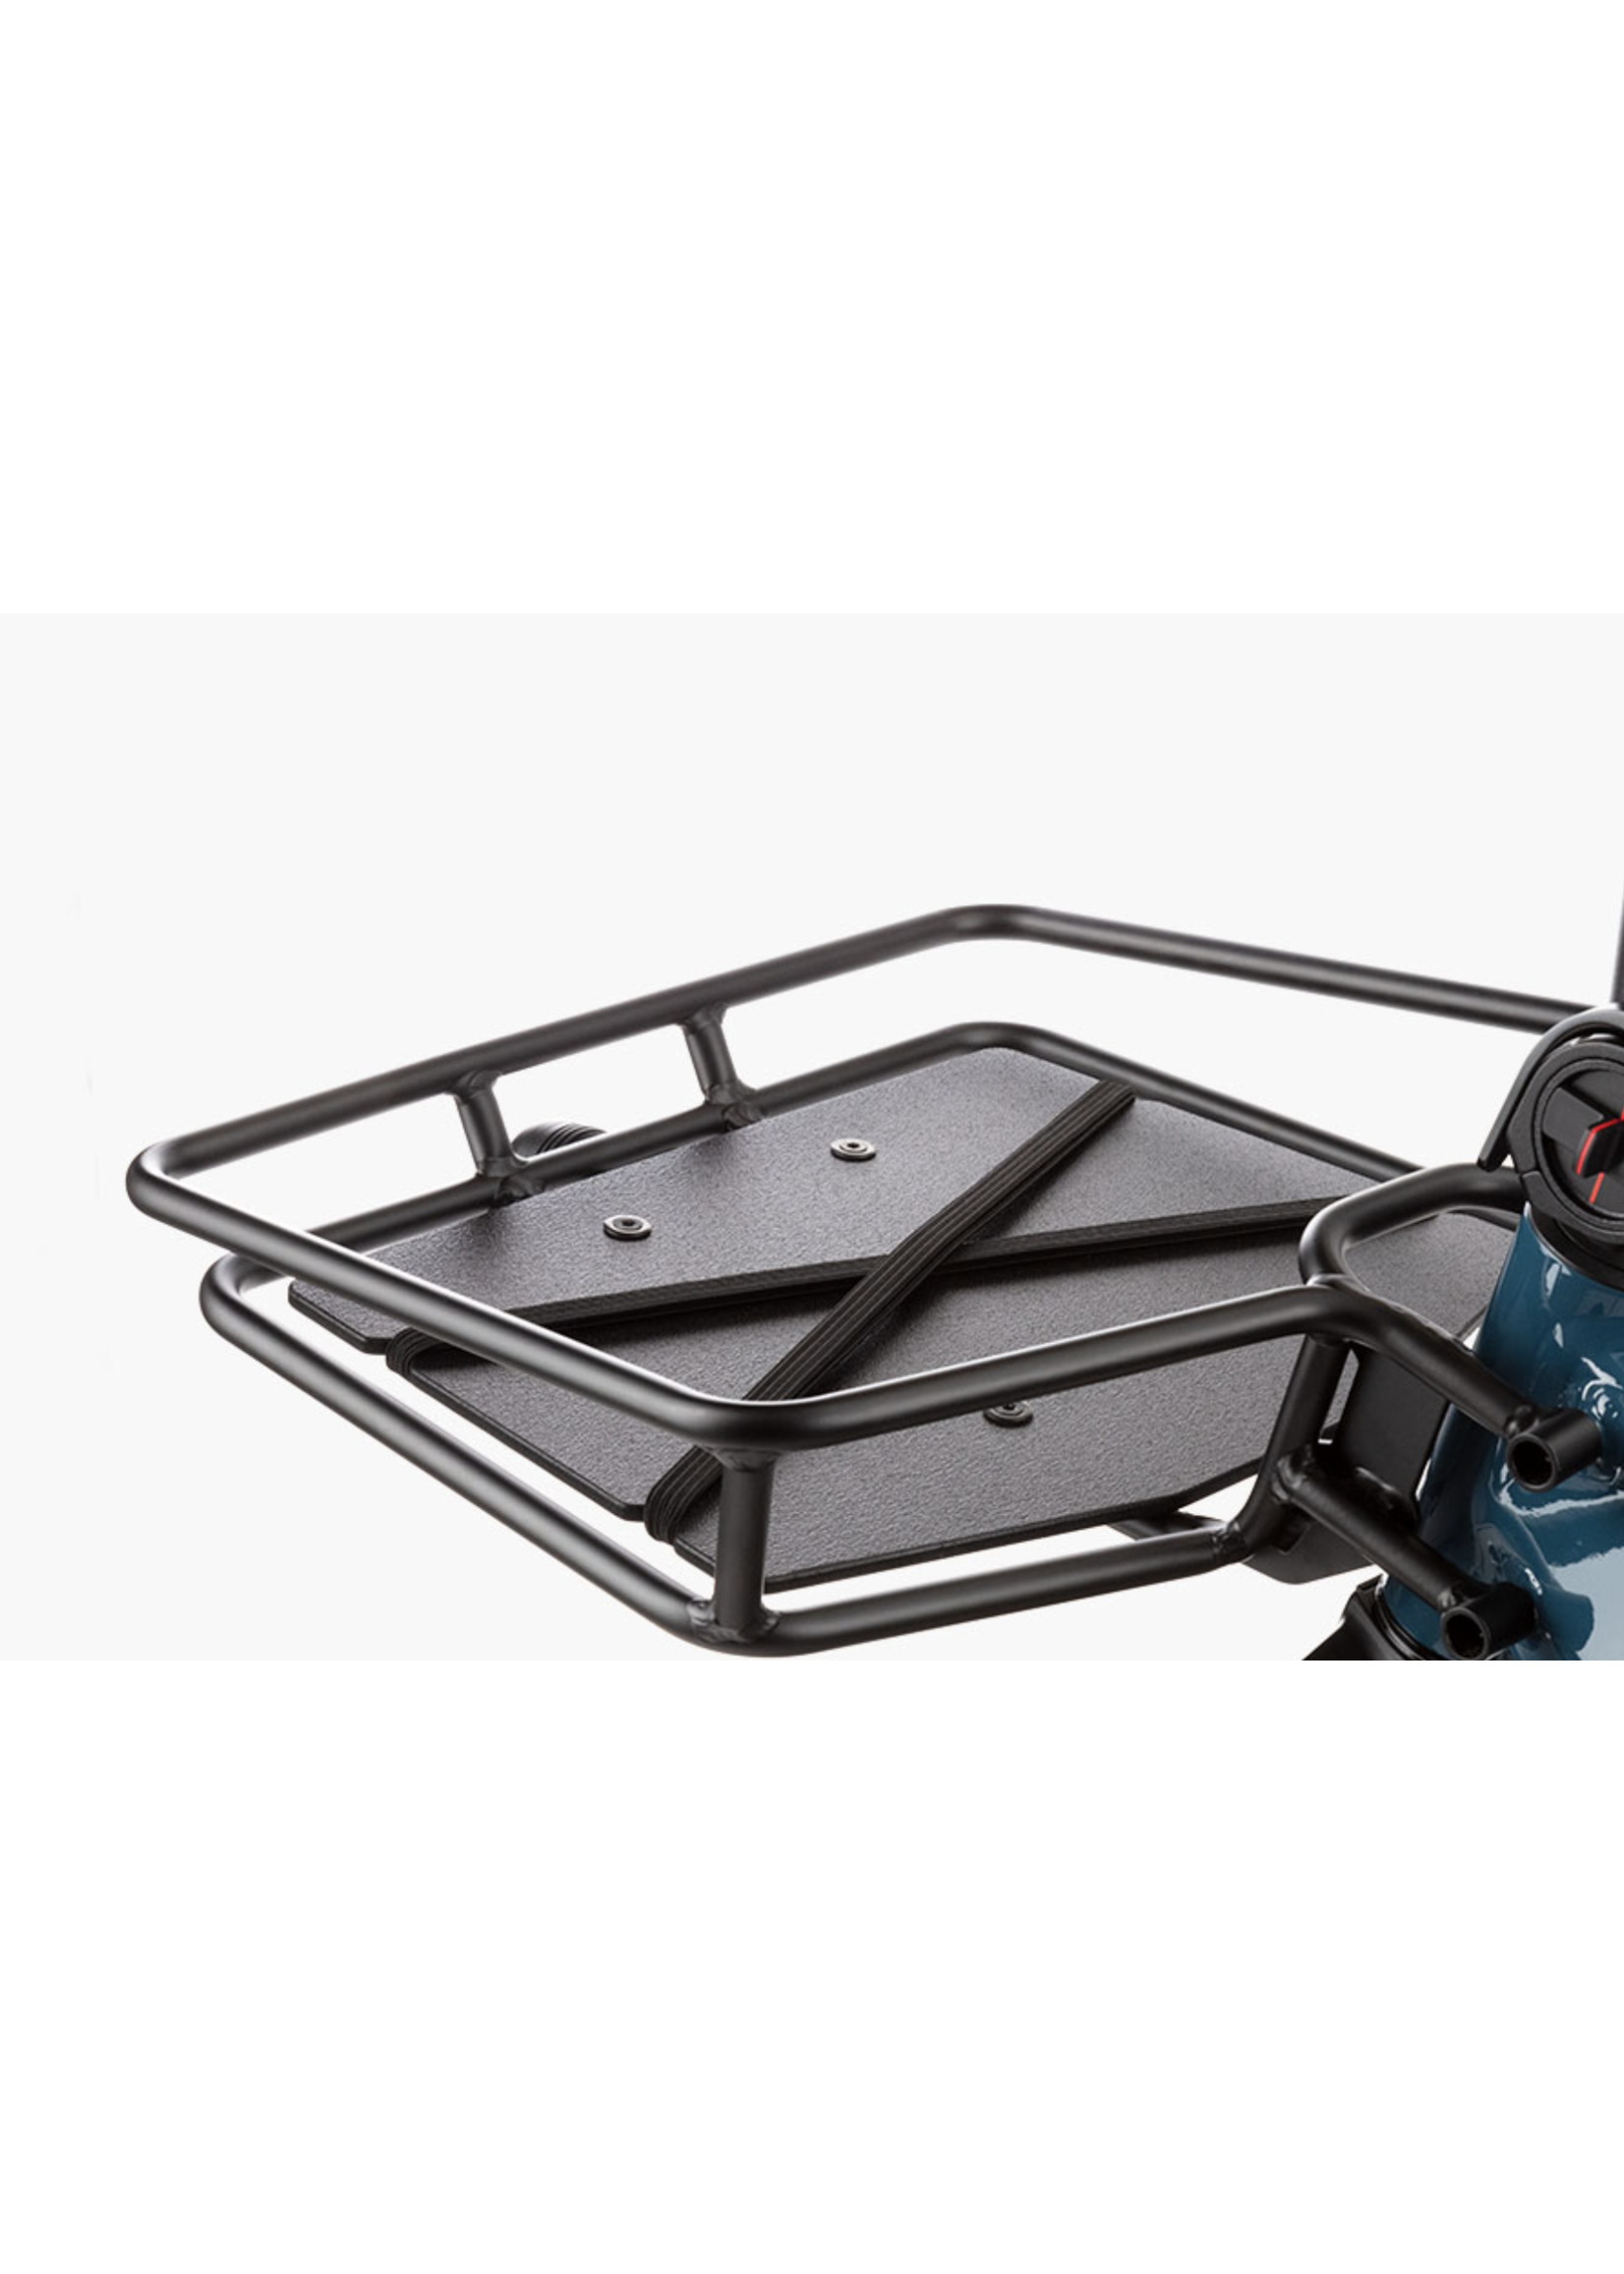 RIESE & MÜLLER Multitinker Vario 625wh petrol/black matt - Kiox 300 - Kit safety bar - RX Chip